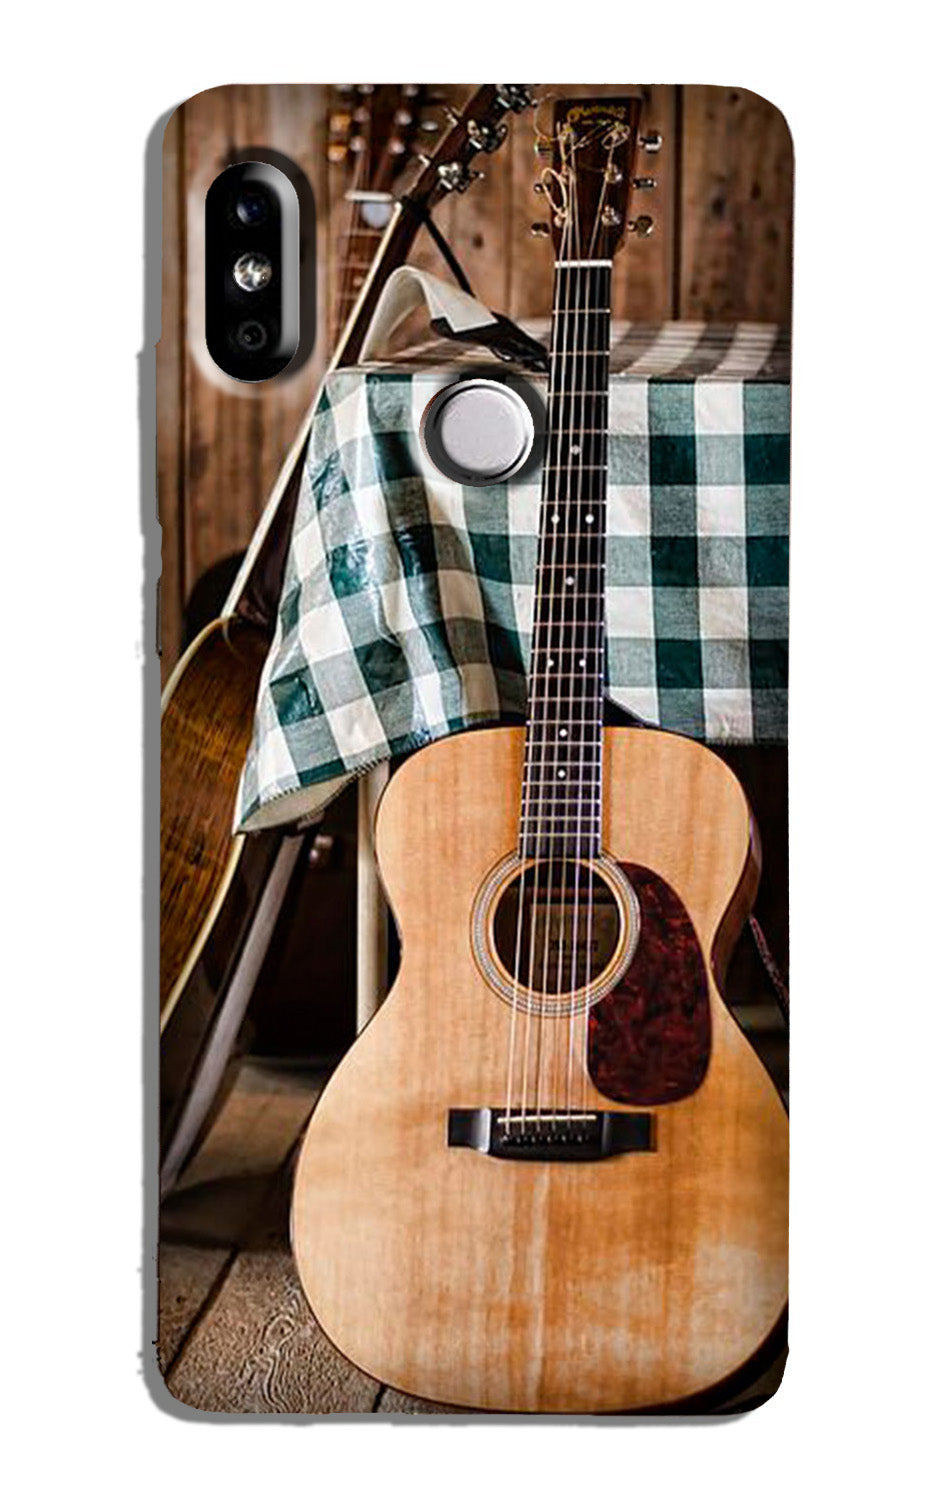 Guitar2 Case for Redmi Note 6 Pro